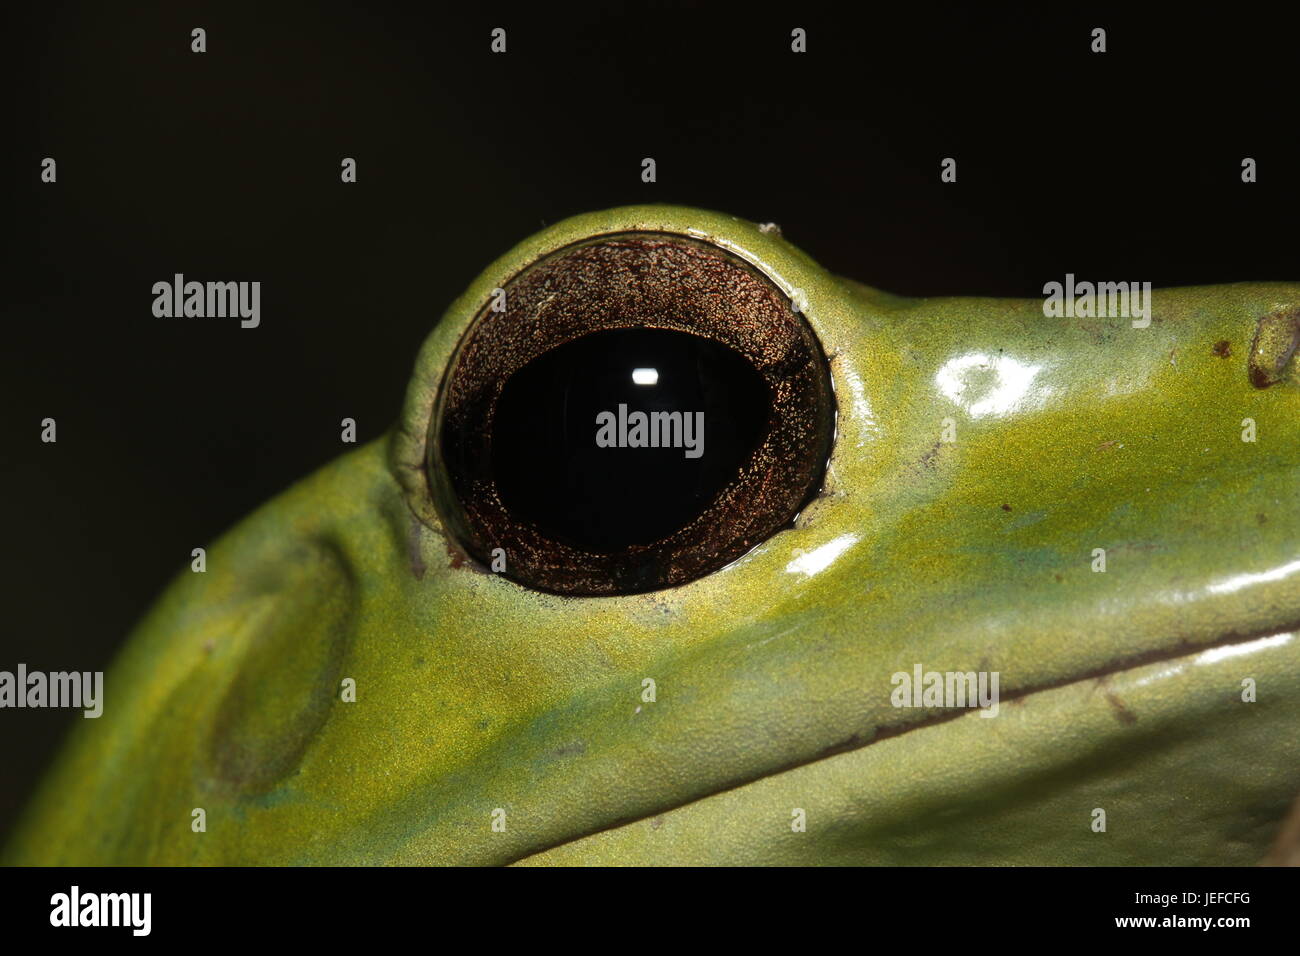 Chinese Gliding Frog, Rhacophorus dennysi, face Stock Photo